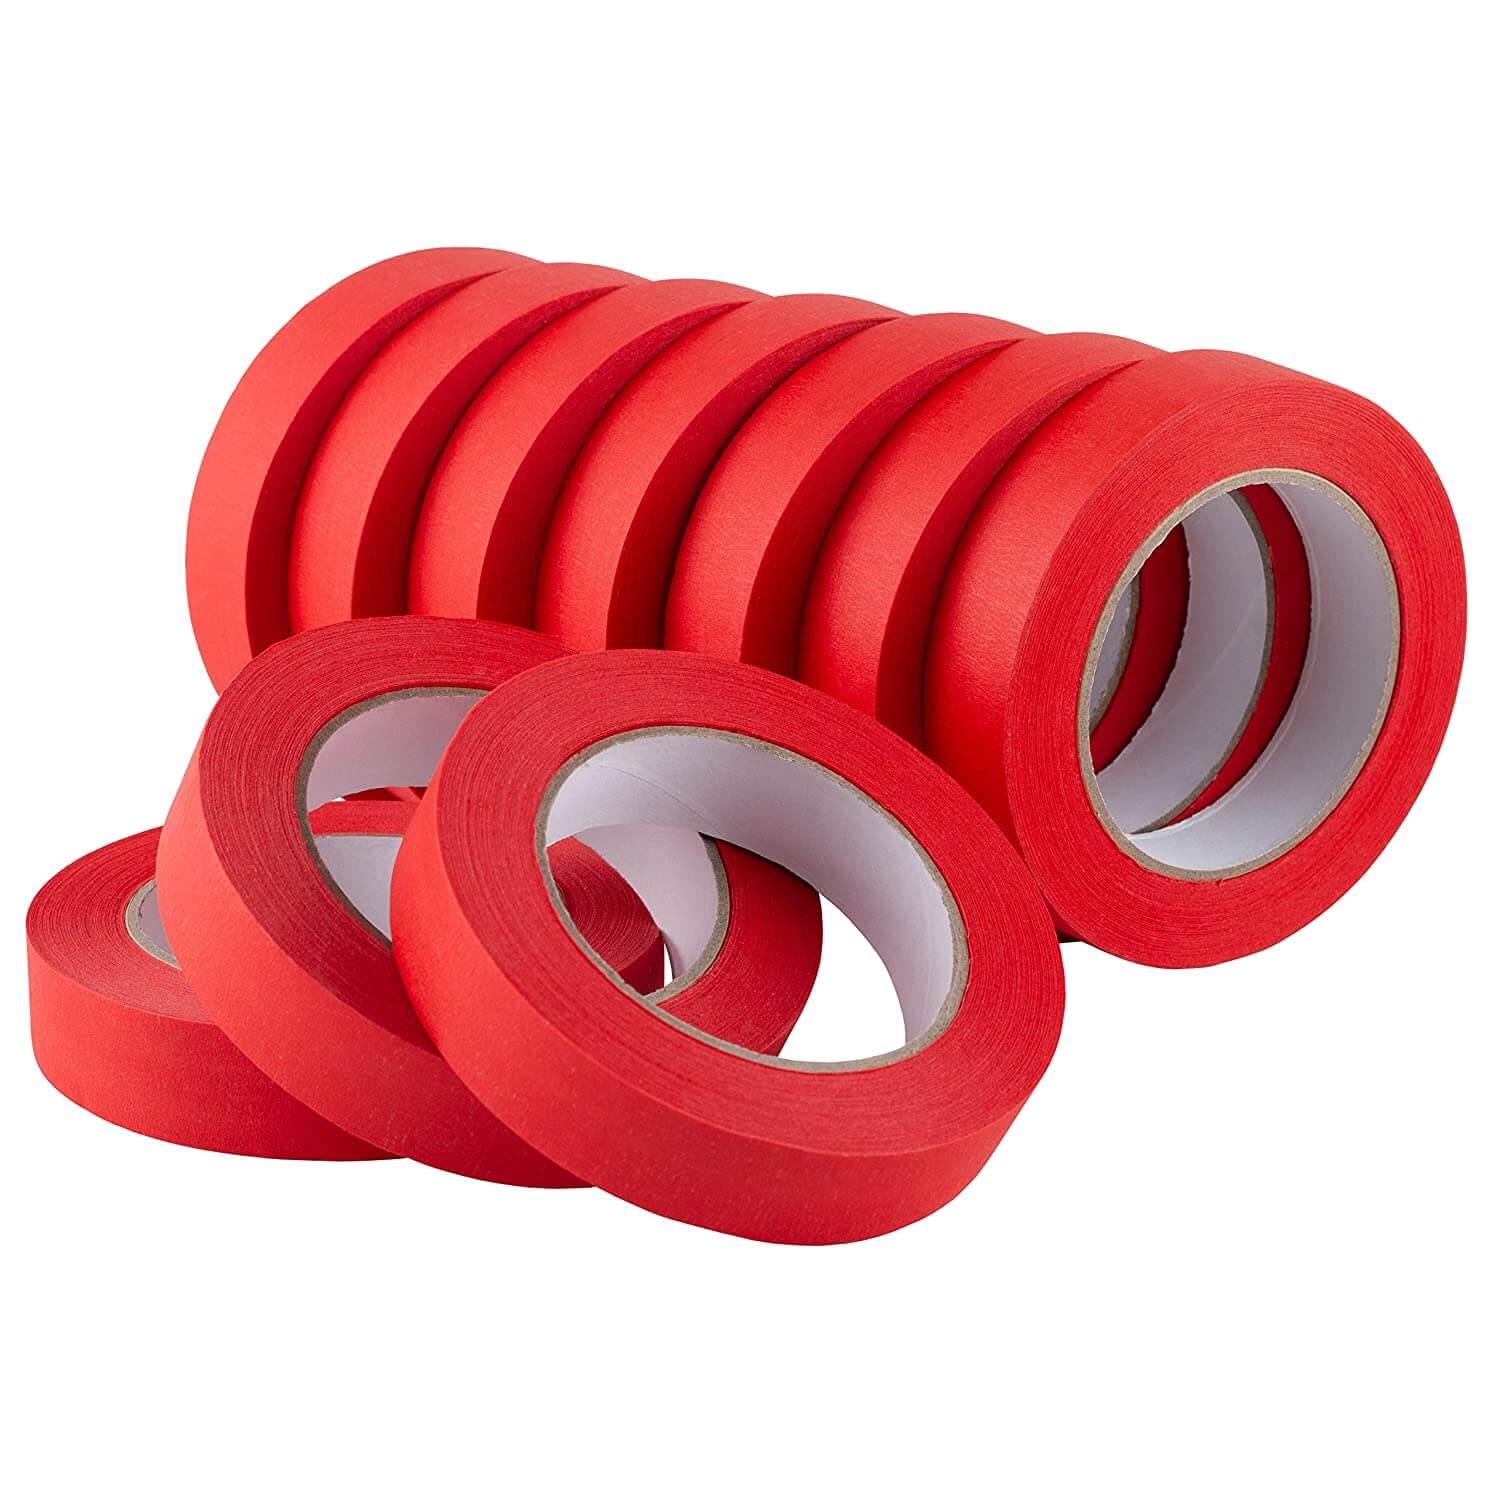 50mm x 33m PET Tape High Temperature Heat Resistant For PCB Welding Repair  Red